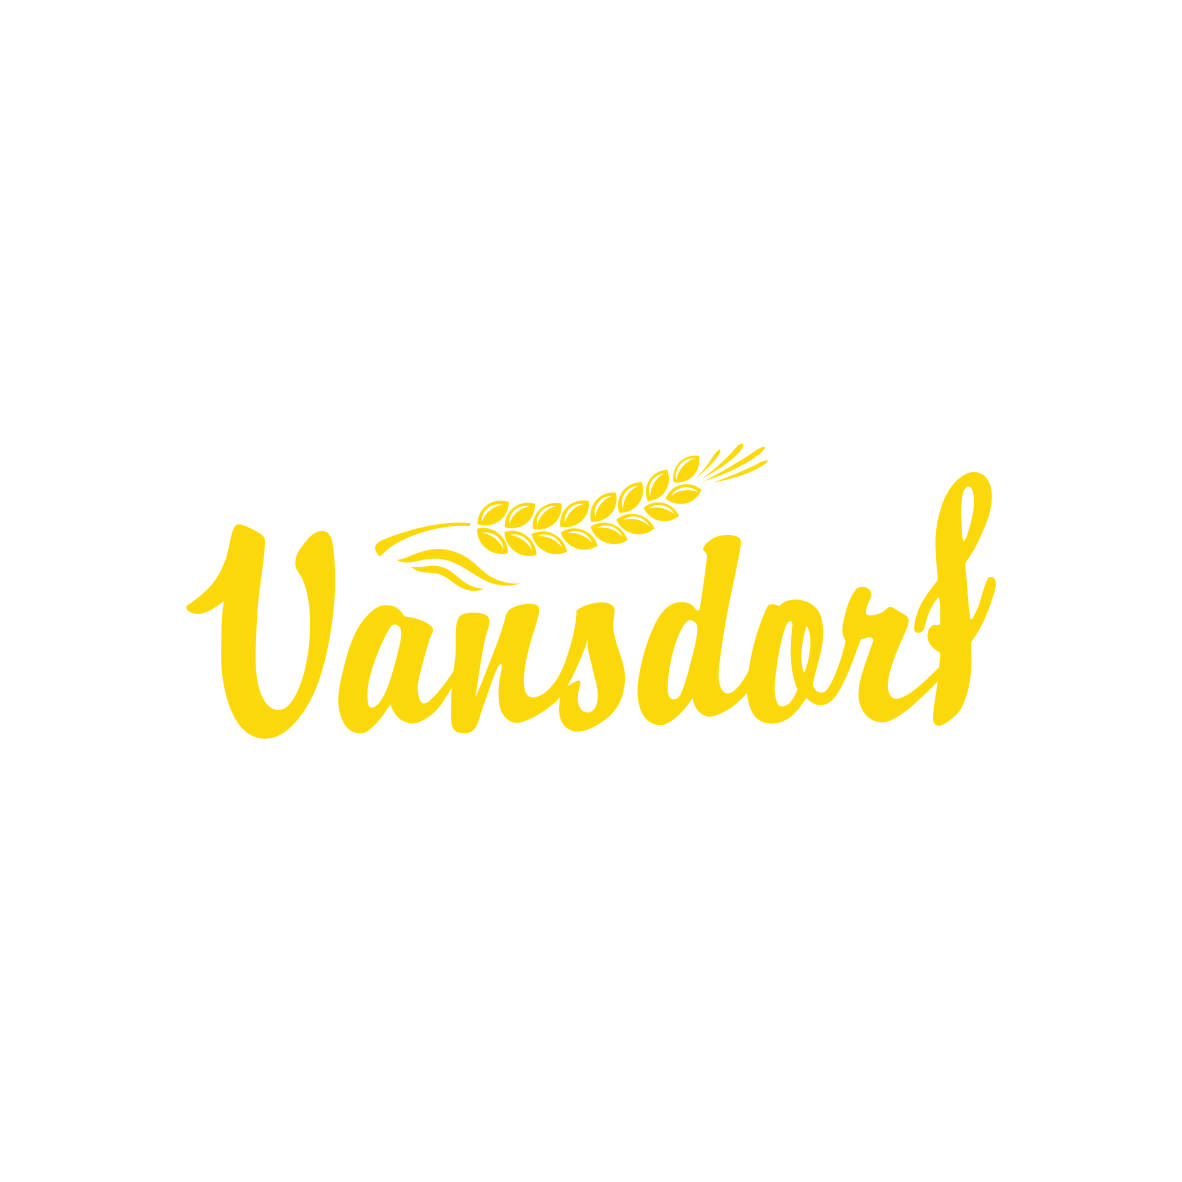 vansdorf